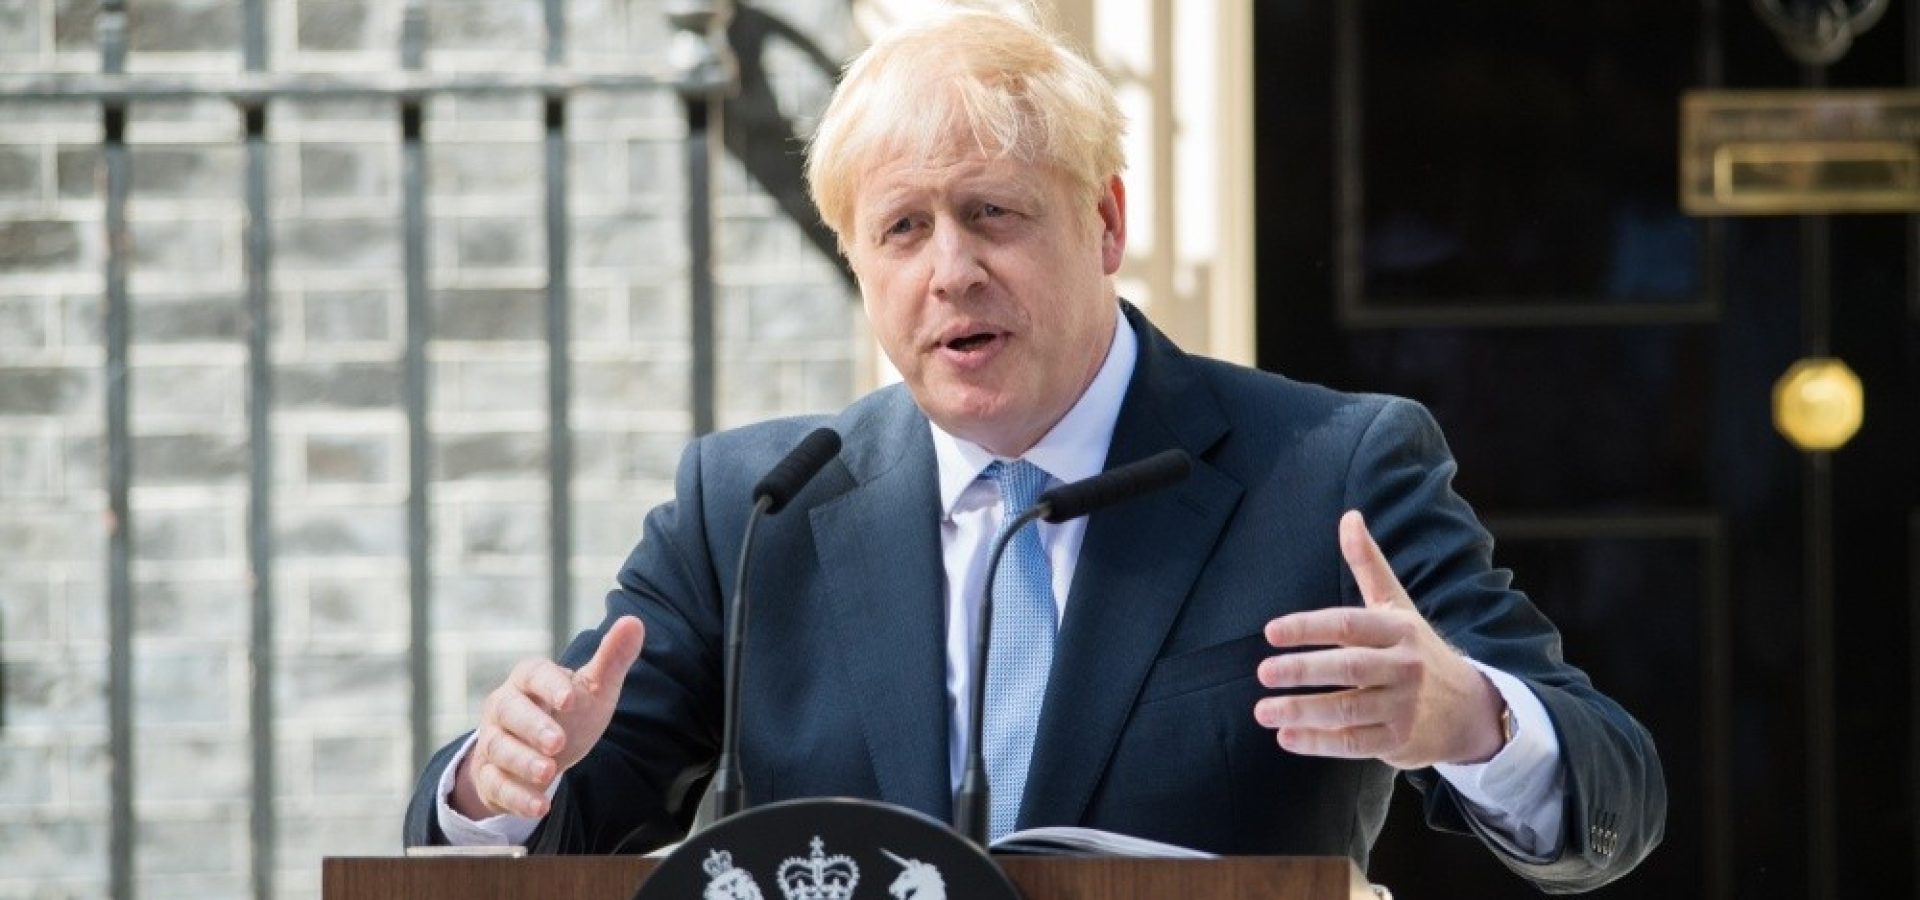 ibest – Parliament: Boris Johnson speaking in front of a podium.